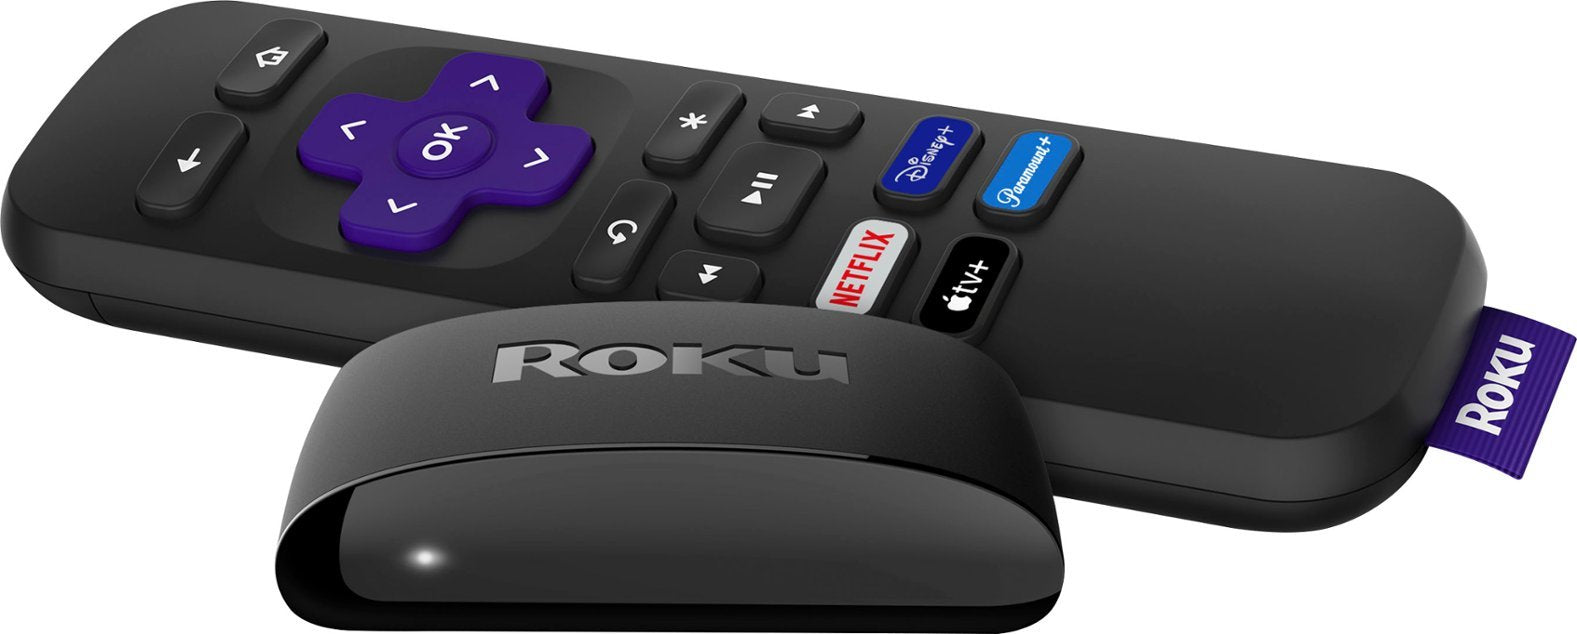 Roku Express (New) HD Streaming Device (3960RW)